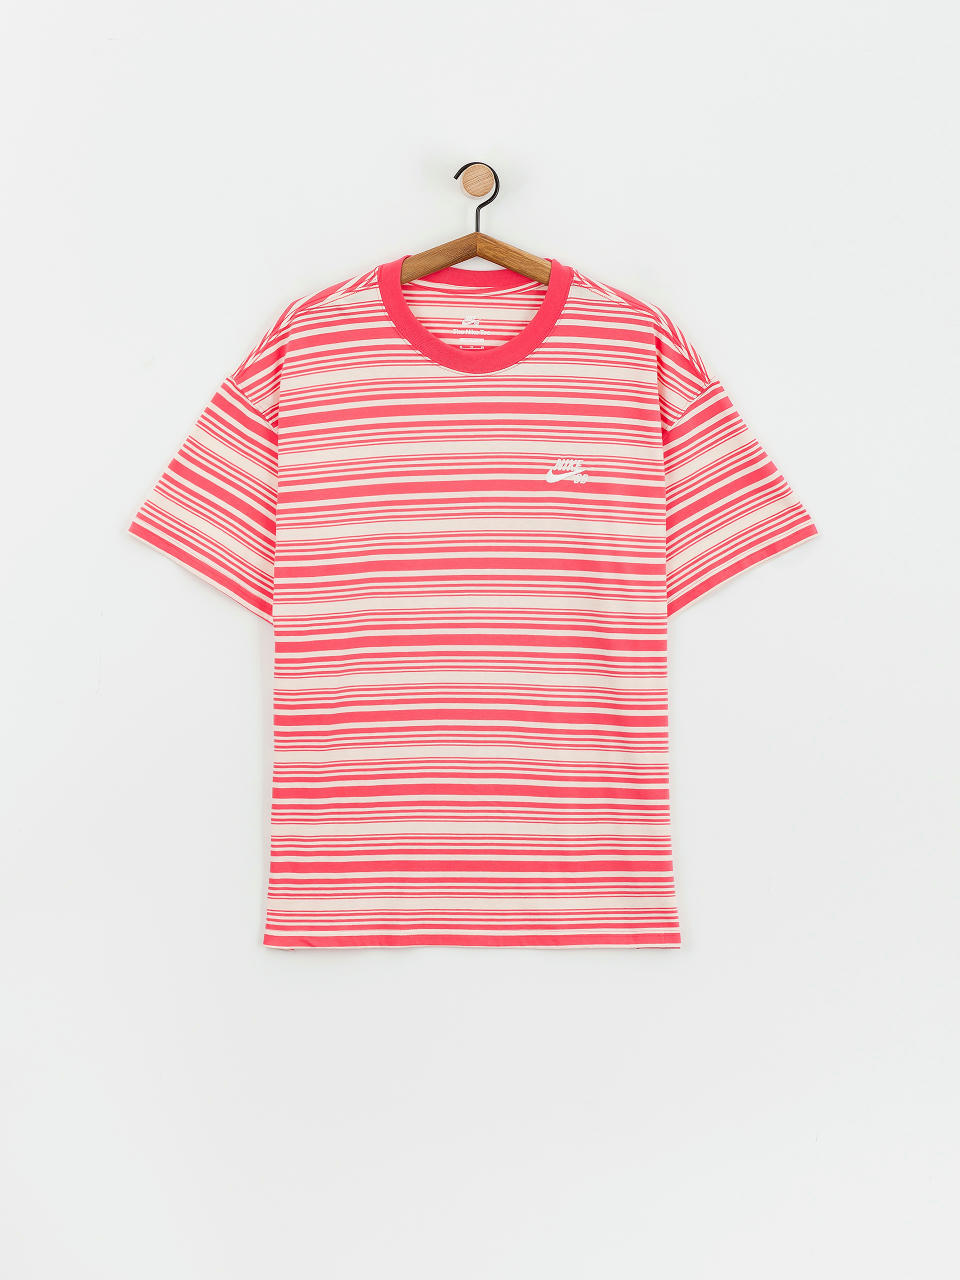 T-shirt Nike SB Stripes (guava ice)